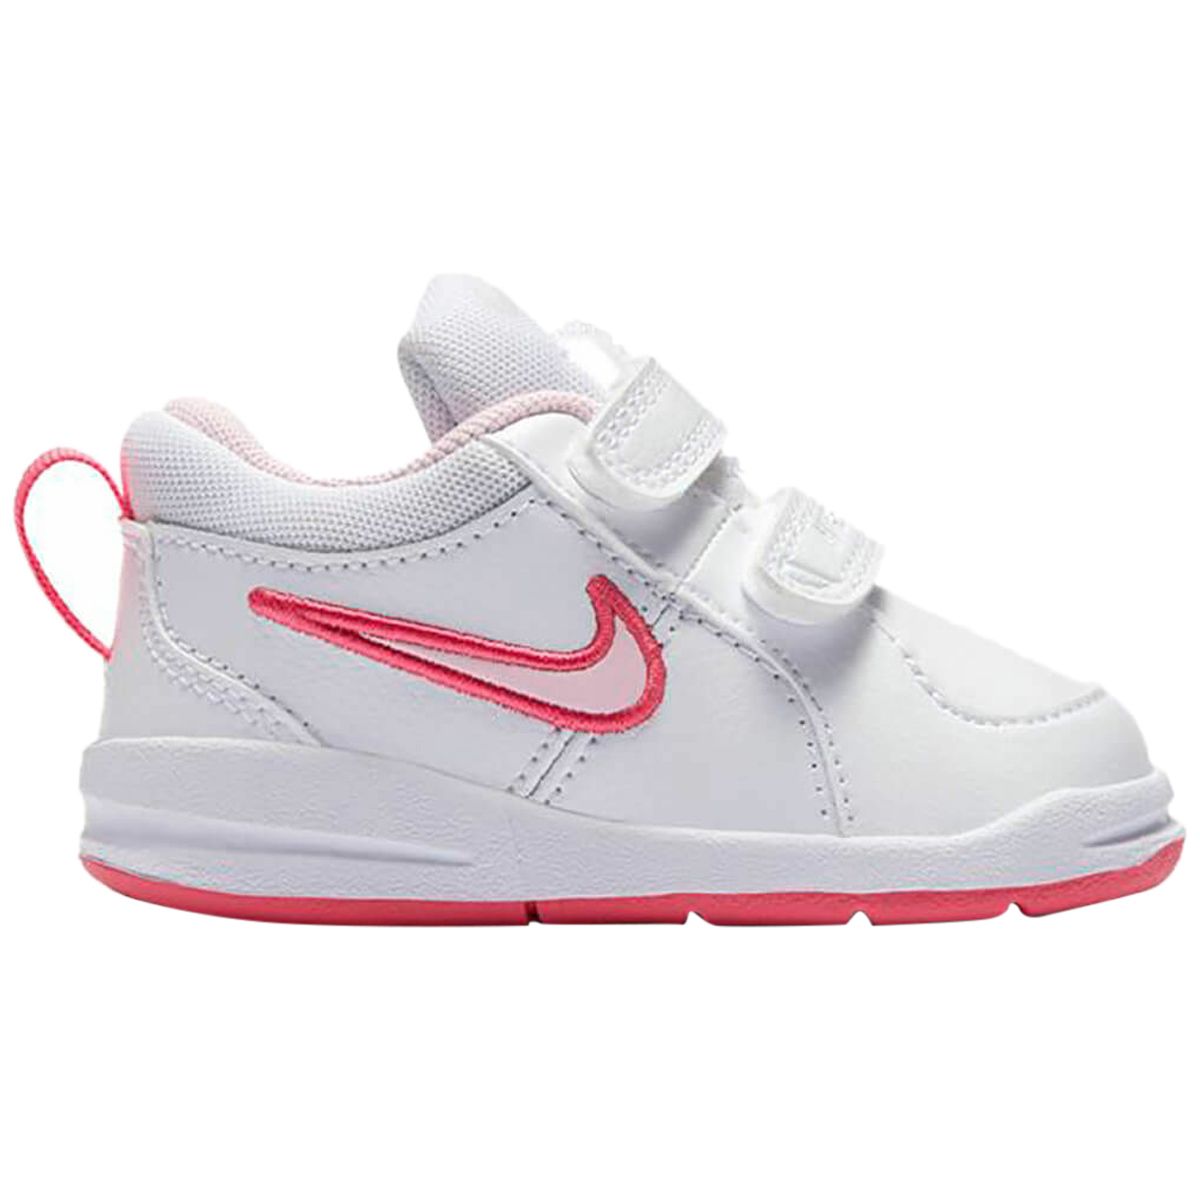 Nike Shoes Pico 4 (TDV) Double Boys / Girls Style :454478